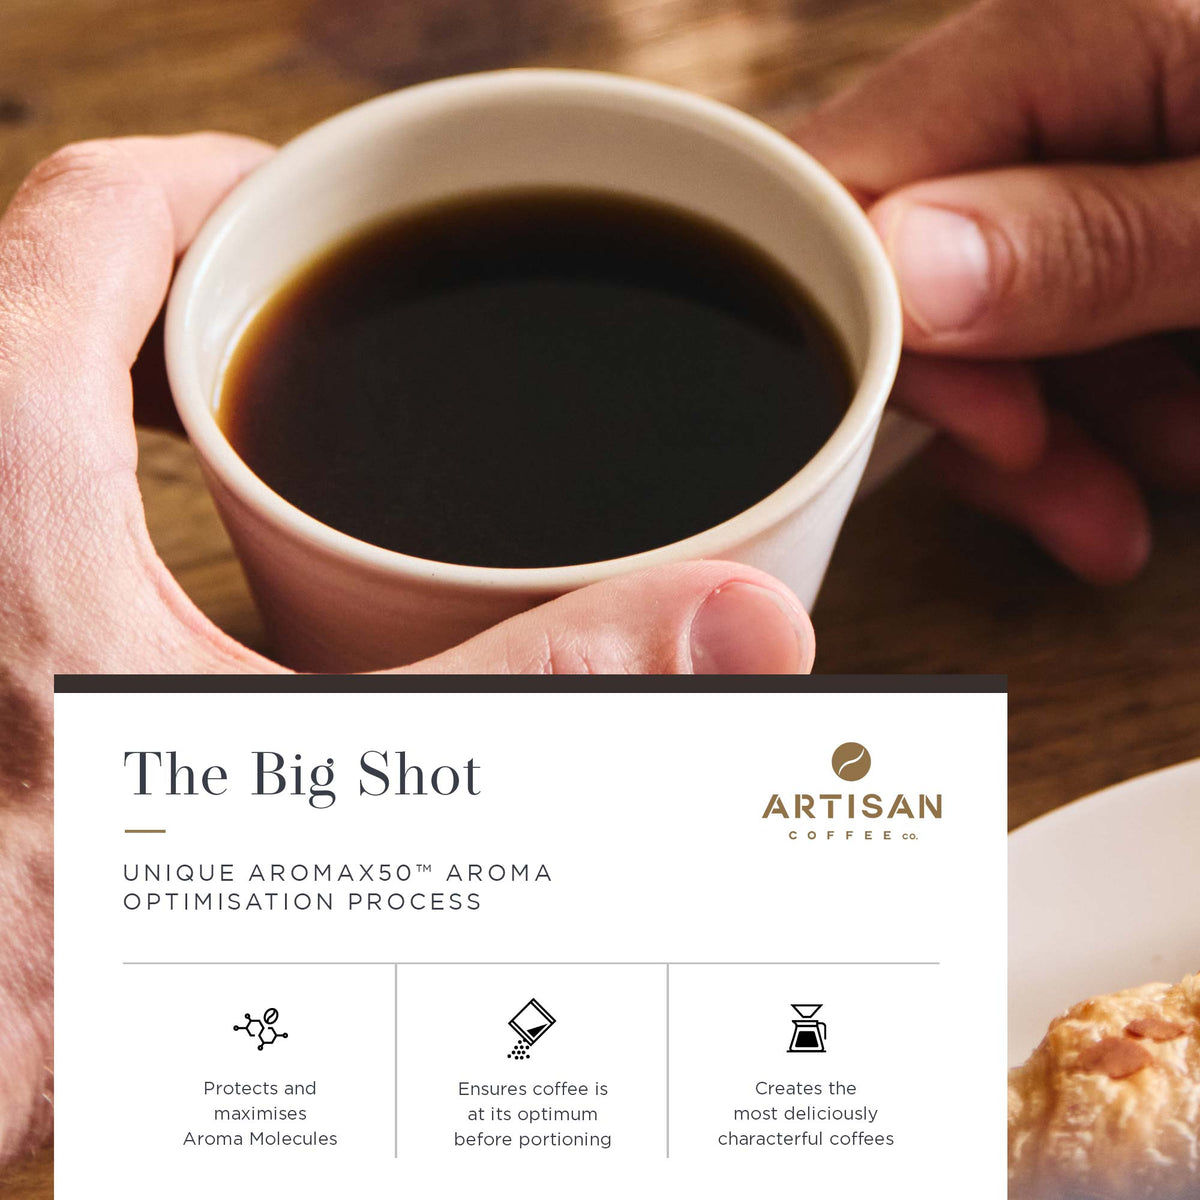 Artisan Coffee Co The Big Shot ground coffee Infographic aroma